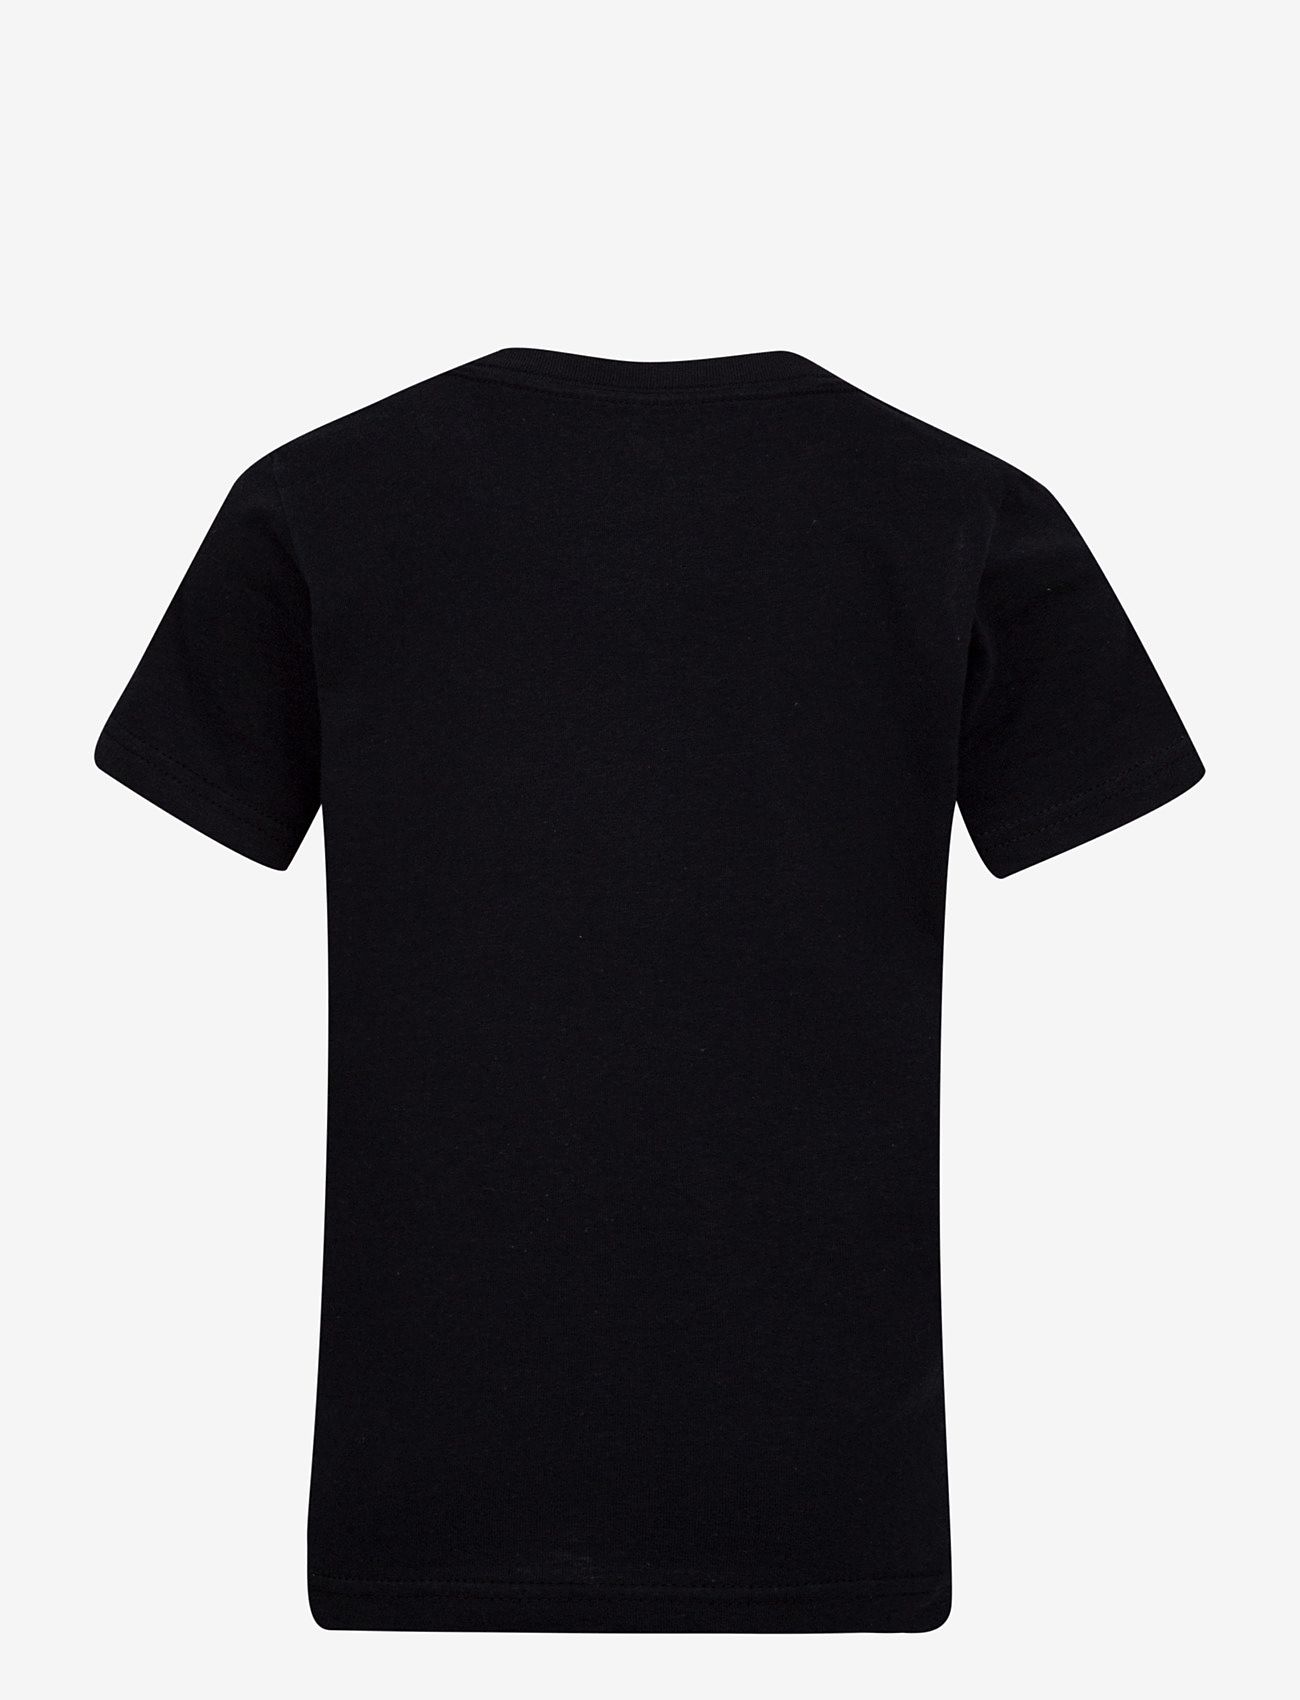 Nike - NKB NIKE FUTURA SS TEE - mönstrad kortärmad t-shirt - black - 1